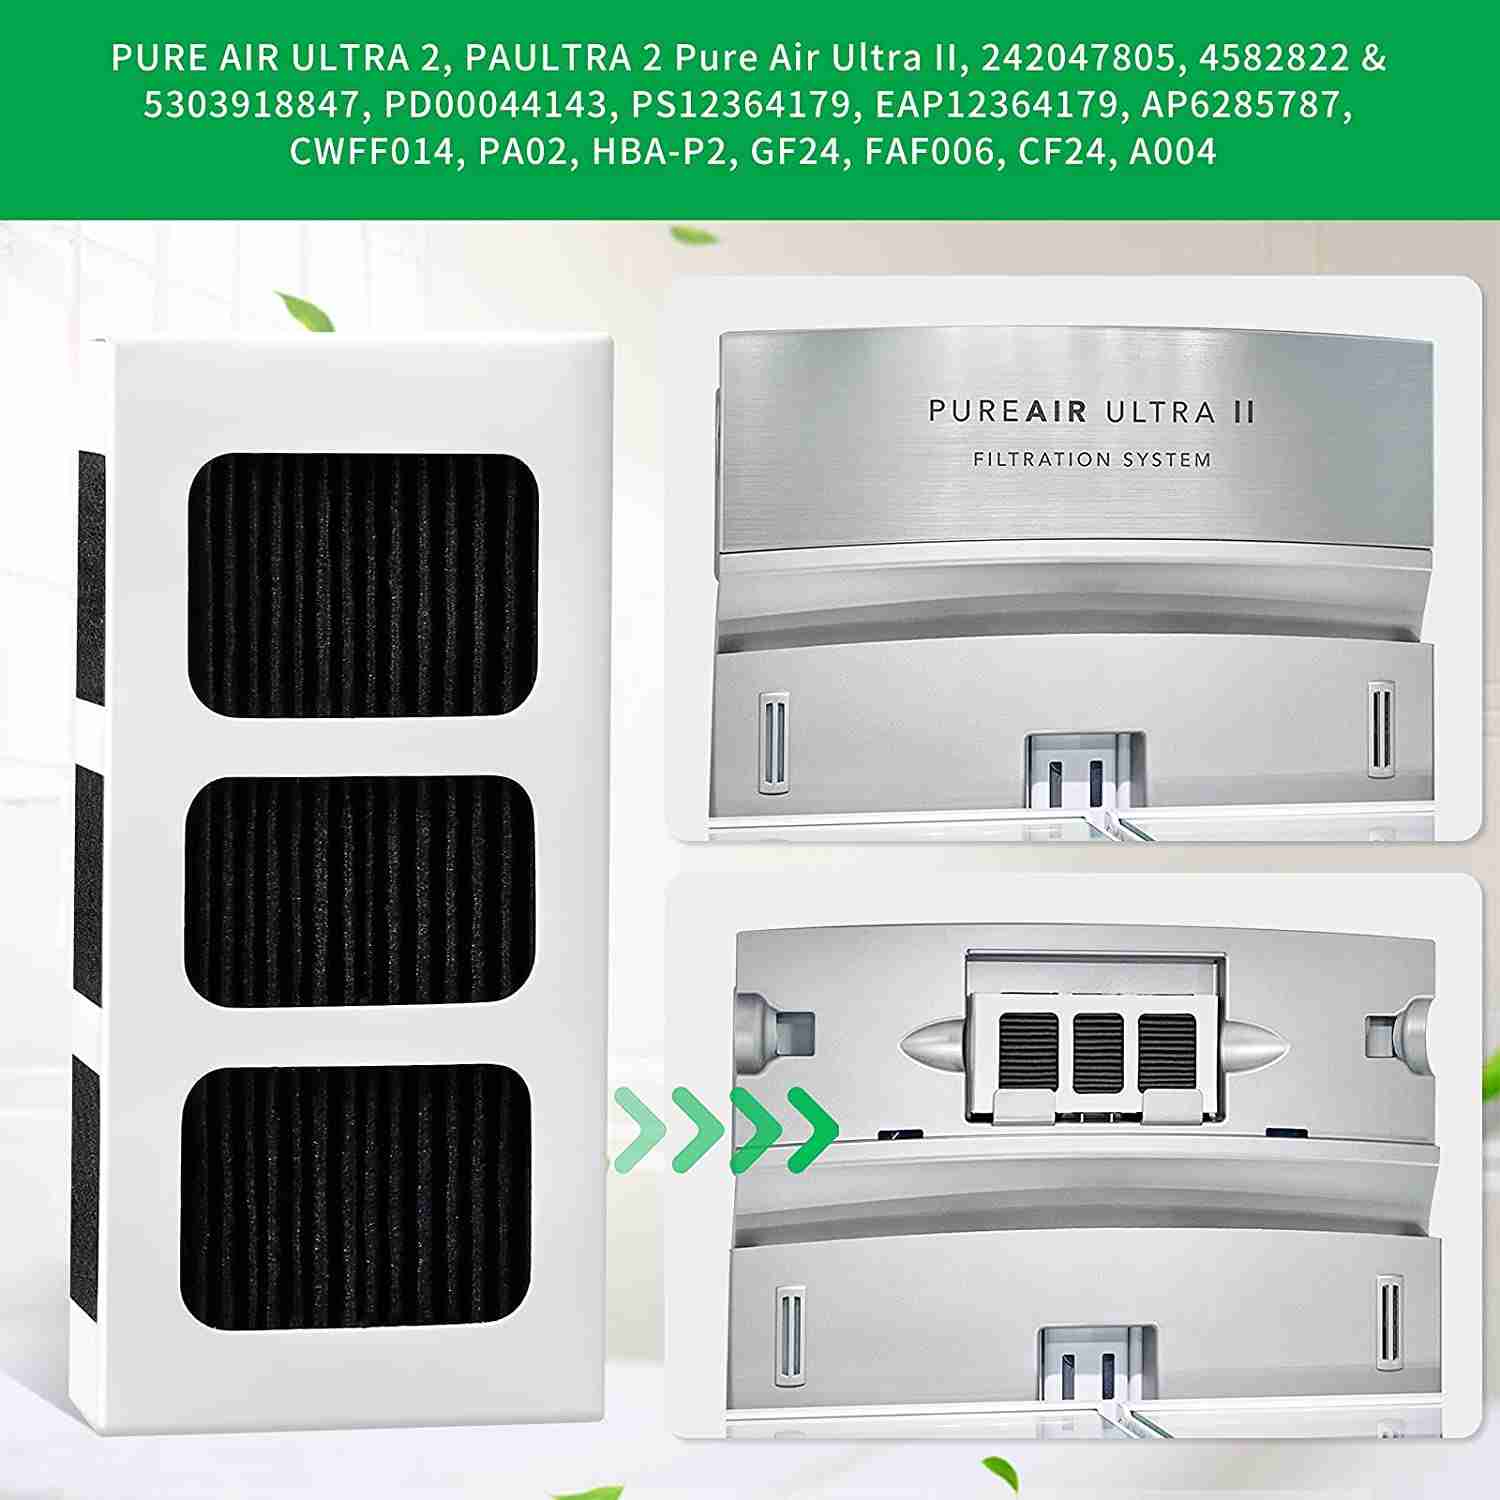 KEEPOW Paultra2 Refrigerator Air Filter Compatible with Frigidaire Pureair Ultra 2, Pure Air Ultra 2, Pureair Ultra ii, Electrolux 242047805, 5303918847, EAP12364179 (4 Pack)